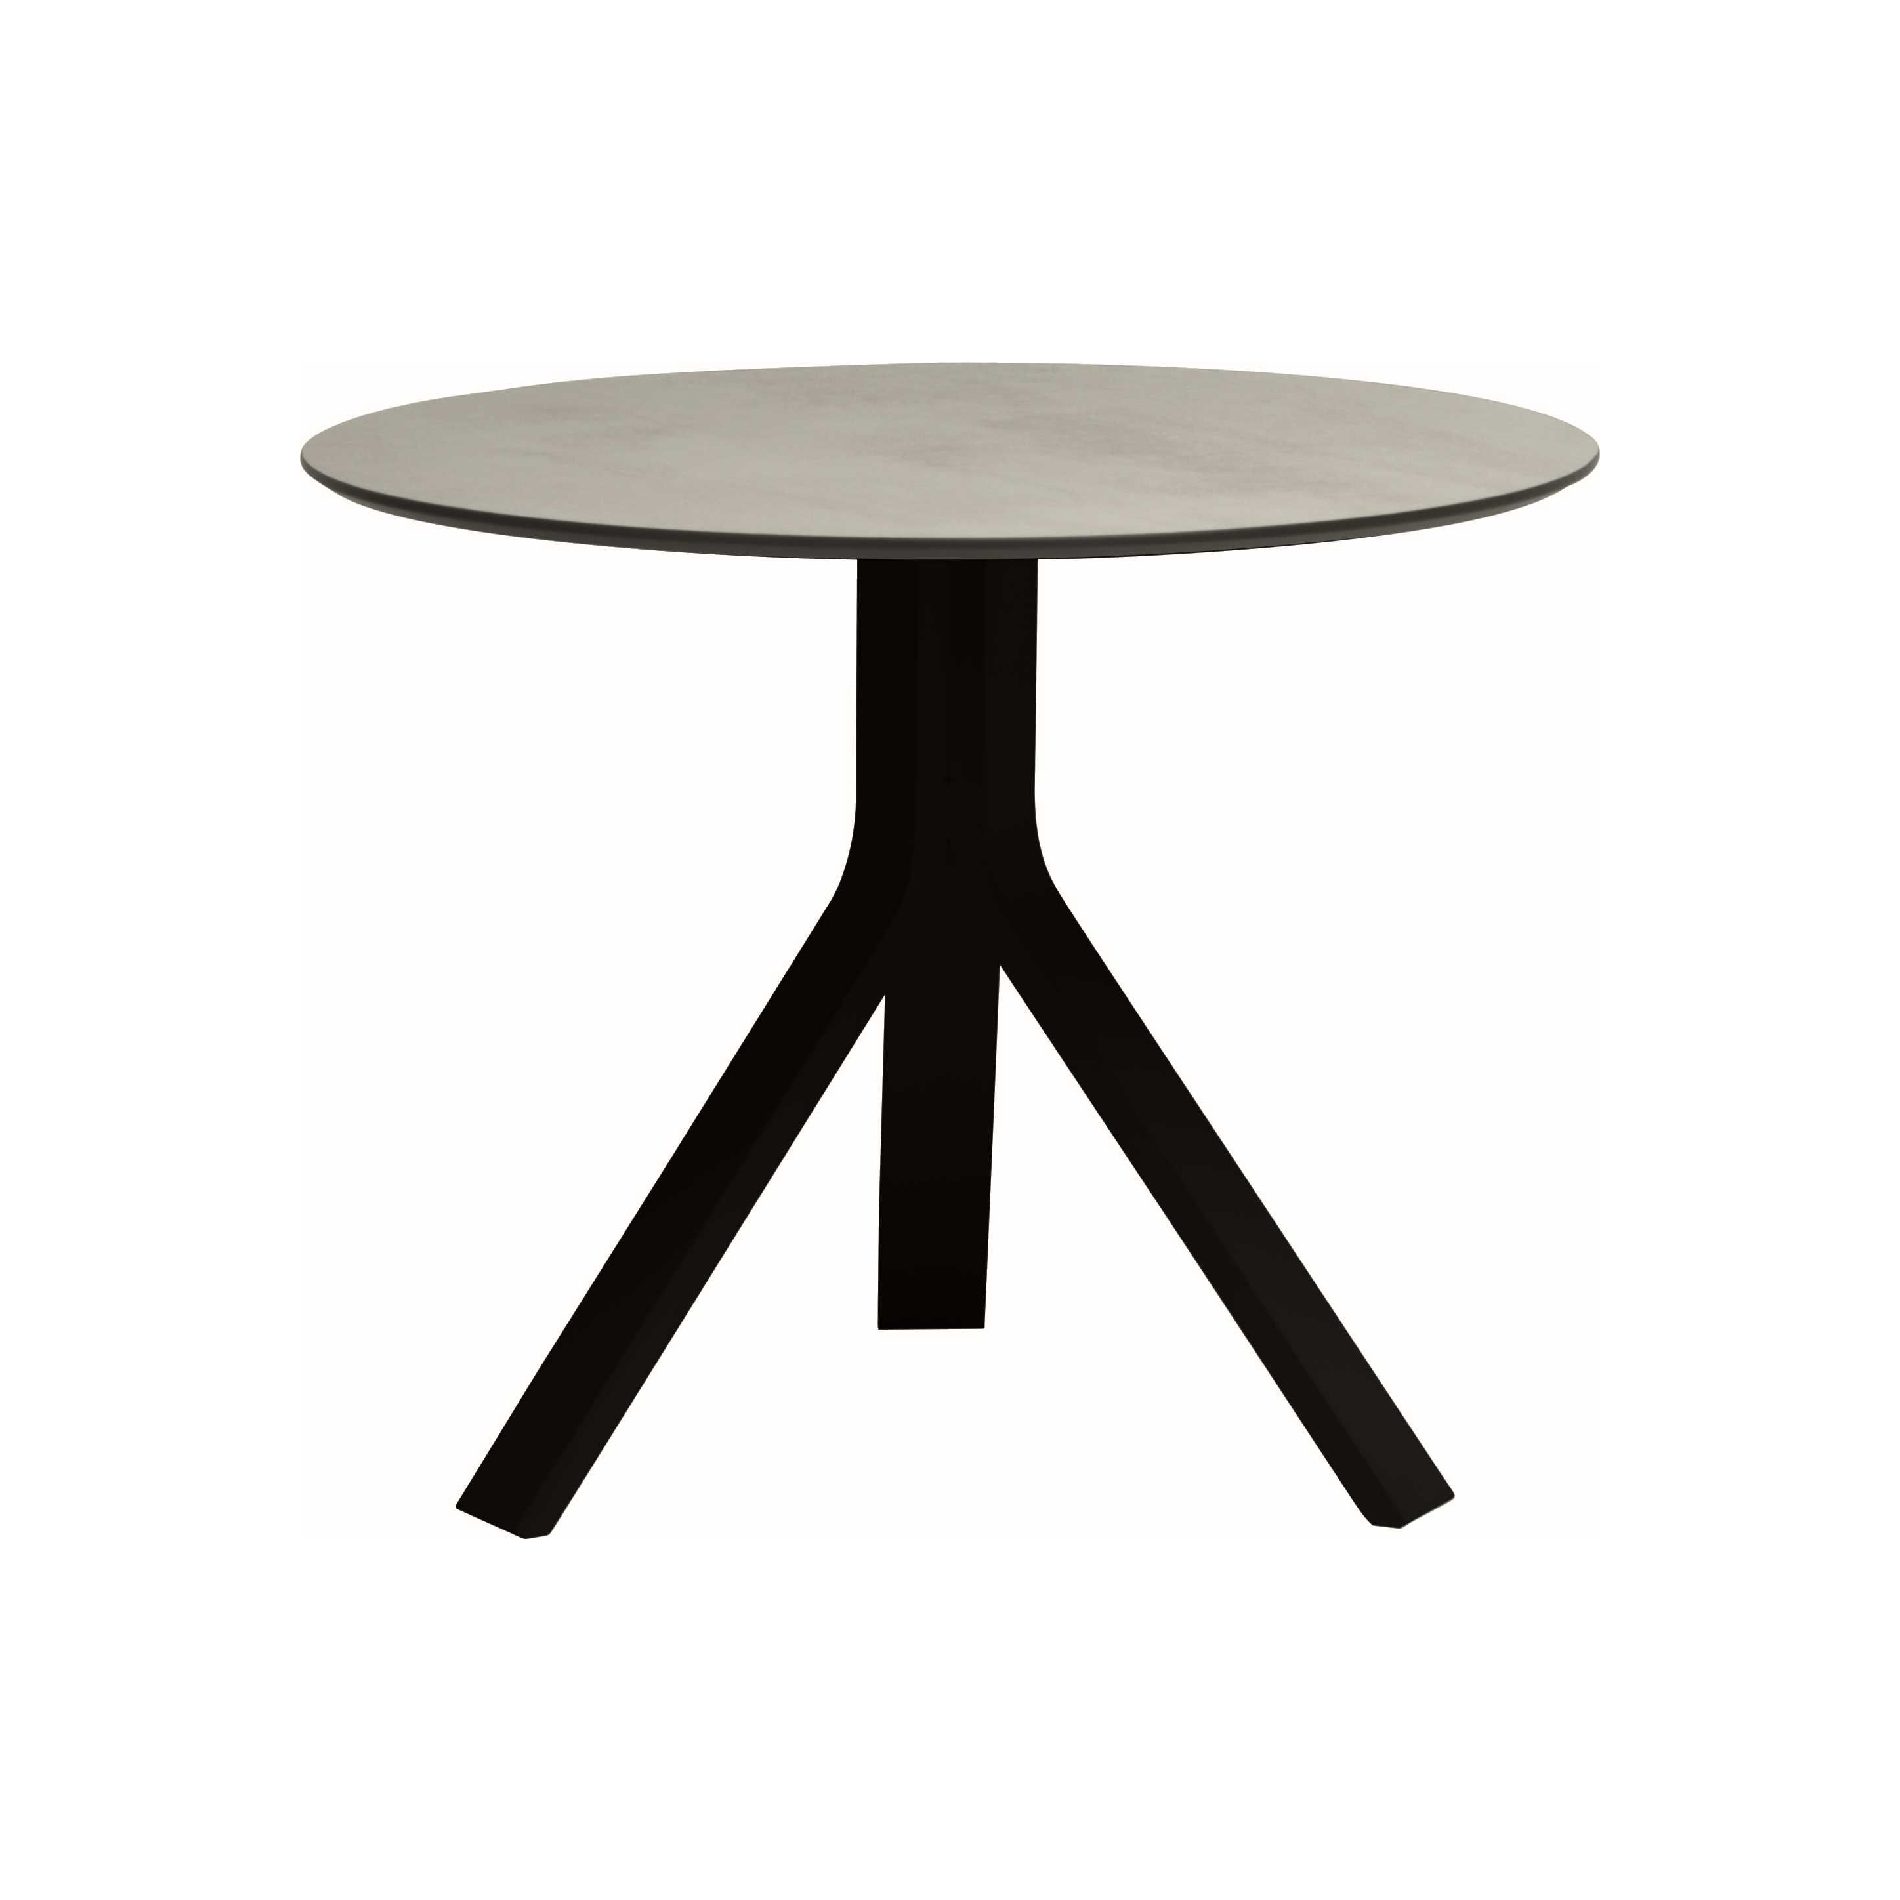 Stern "Freddie" Beistelltisch, Gestell Aluminium schwarz matt, Tischplatte HPL Zement hell, Ø 65 cm, Höhe 53 cm